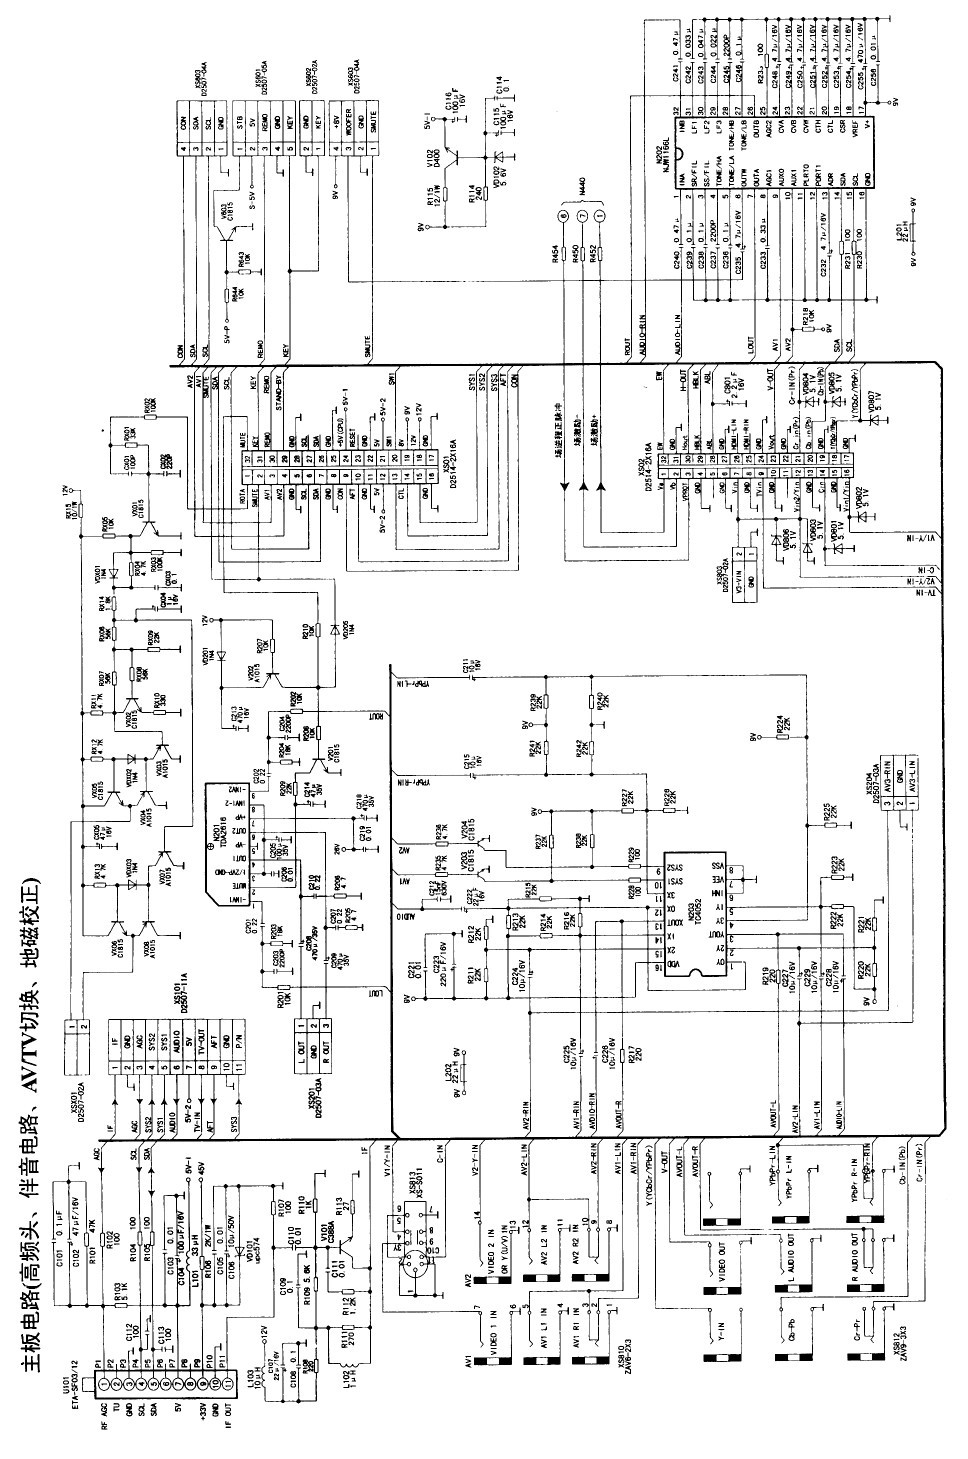 Konka P29ST217 high-definition digital CRT color TV circuit schematic (2)